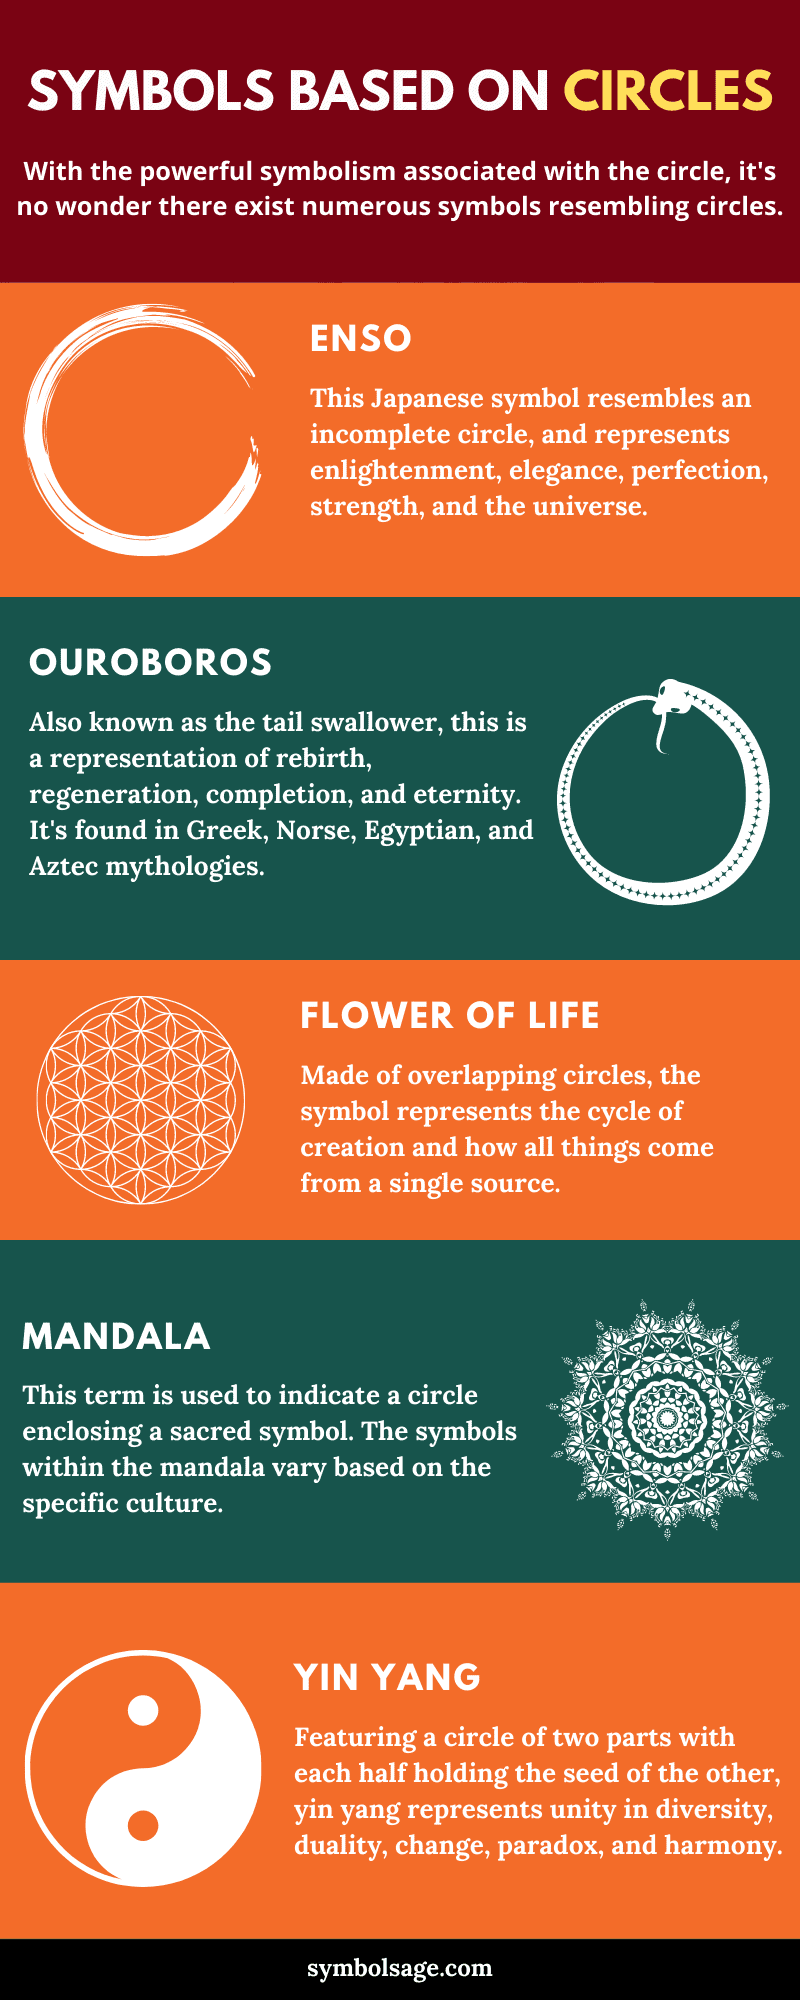 Symbols based on circles